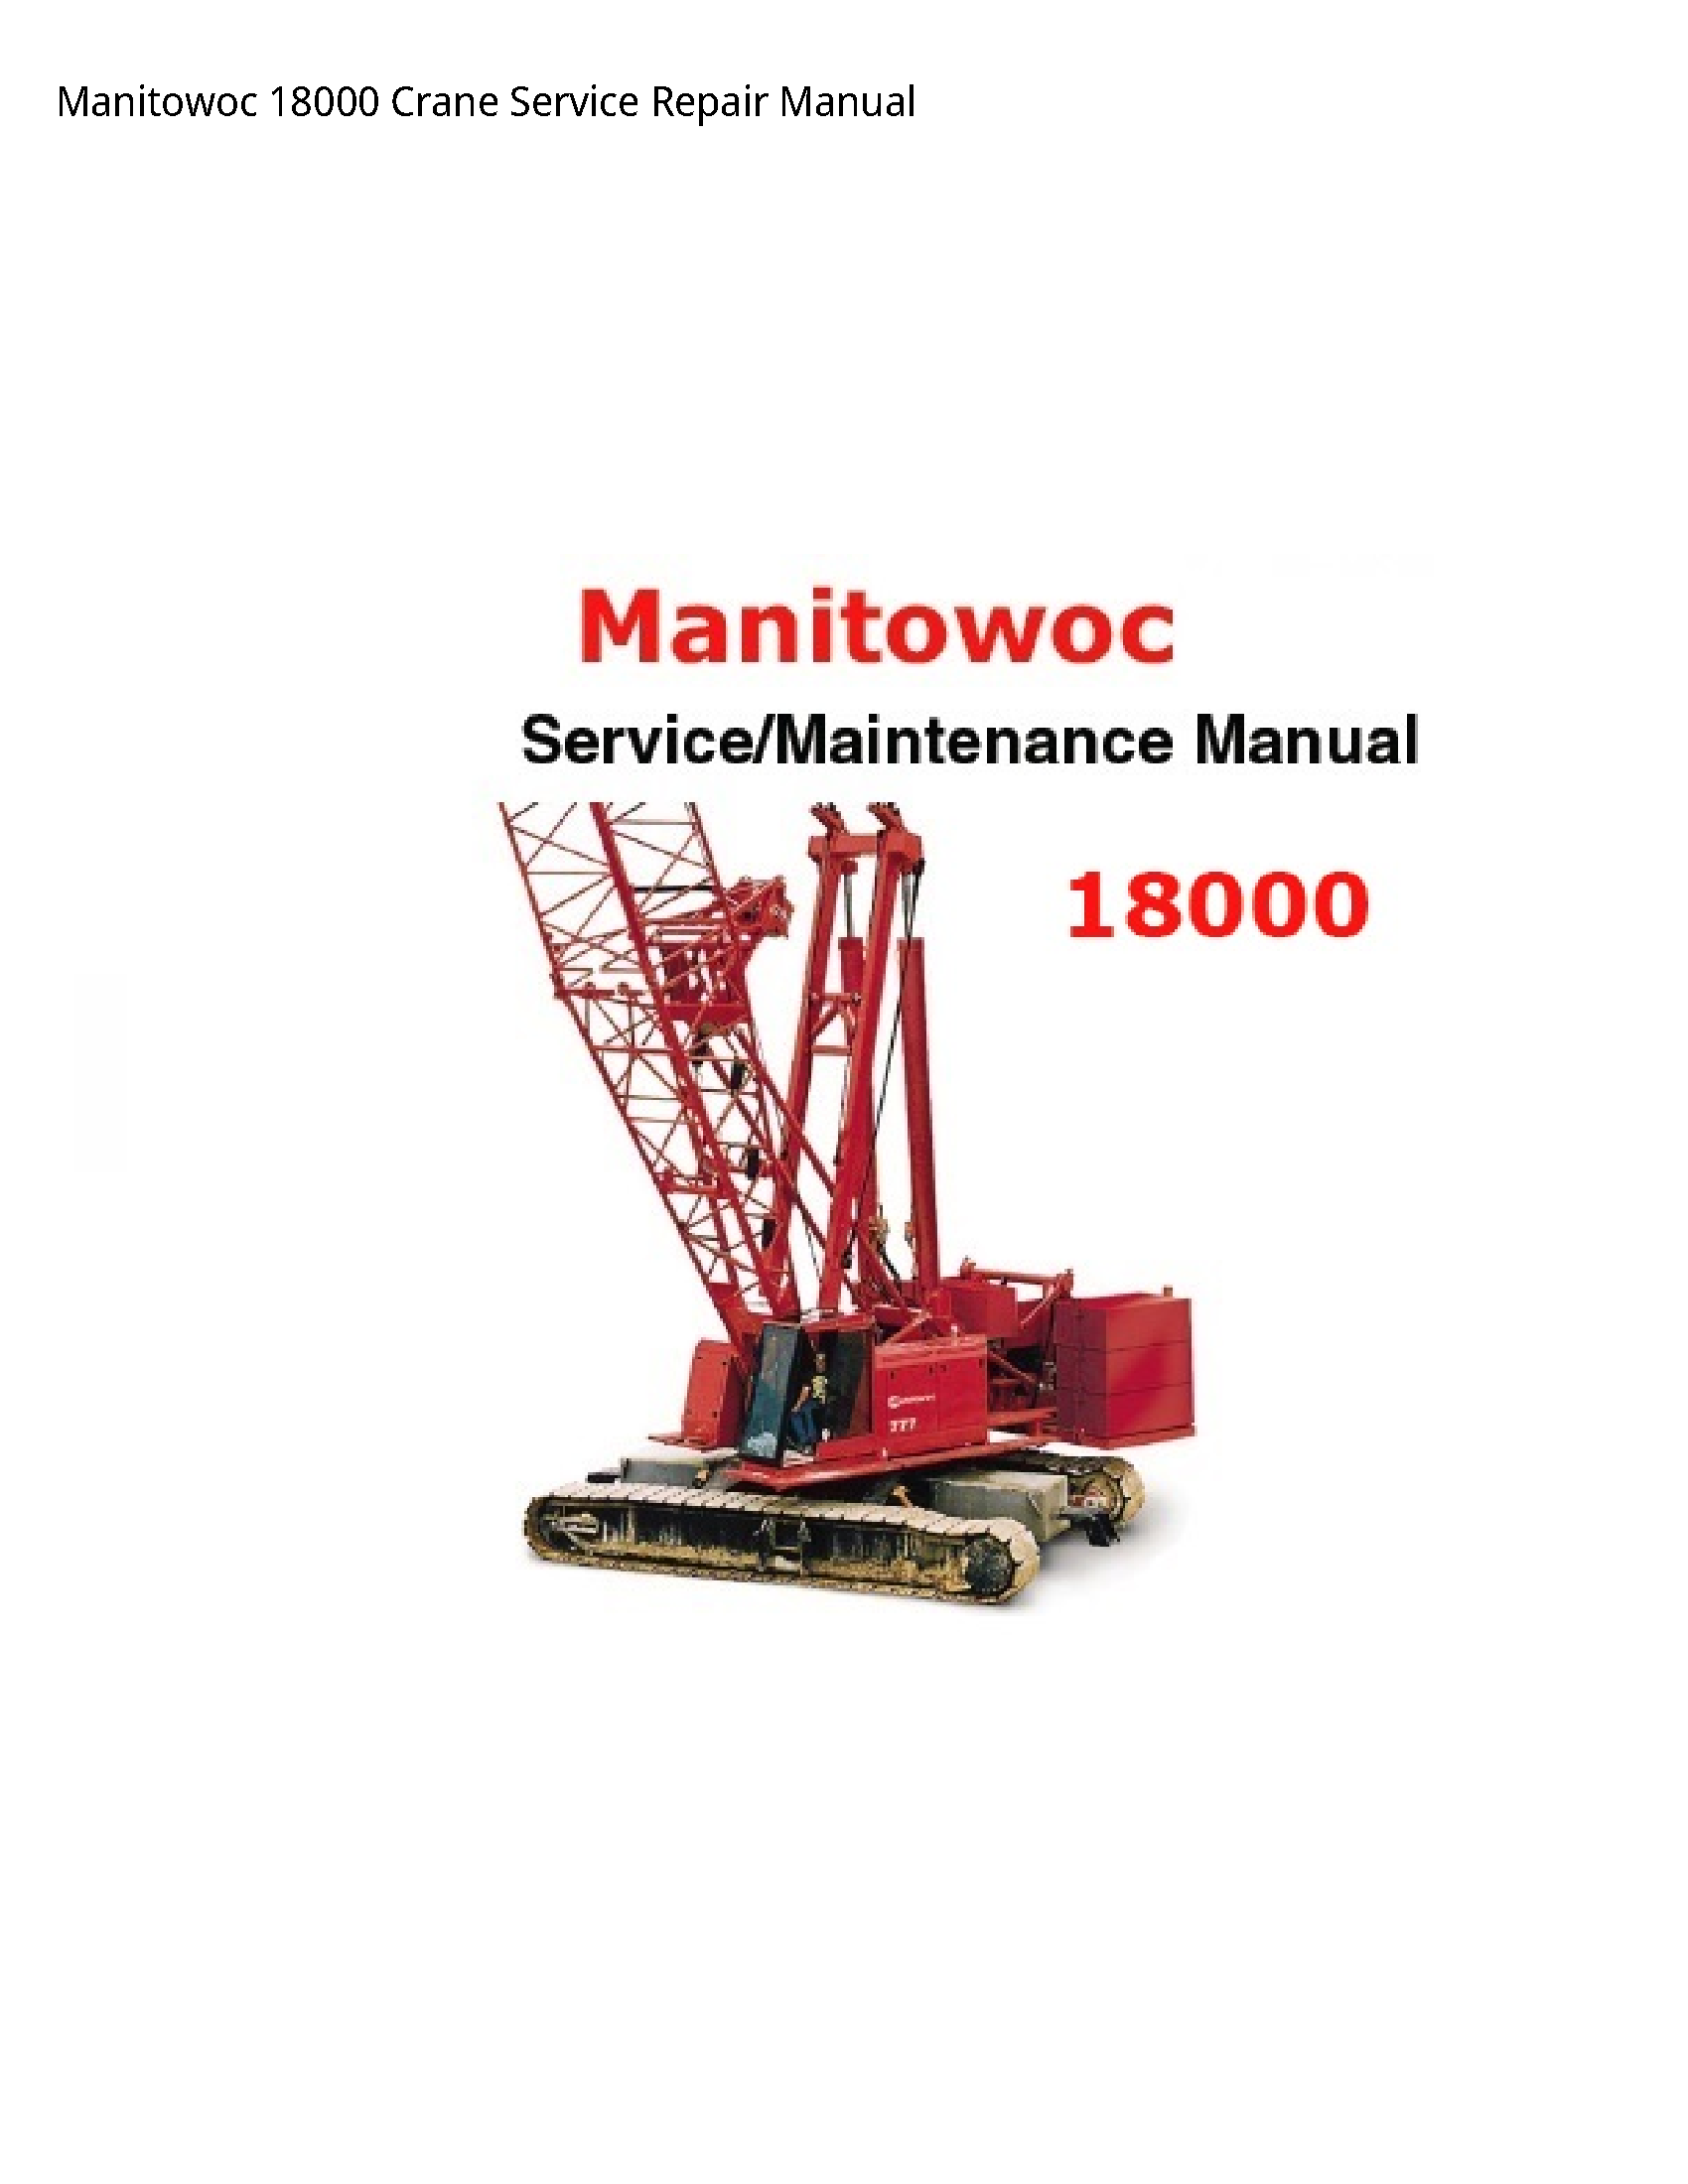 Manitowoc 18000 Crane manual